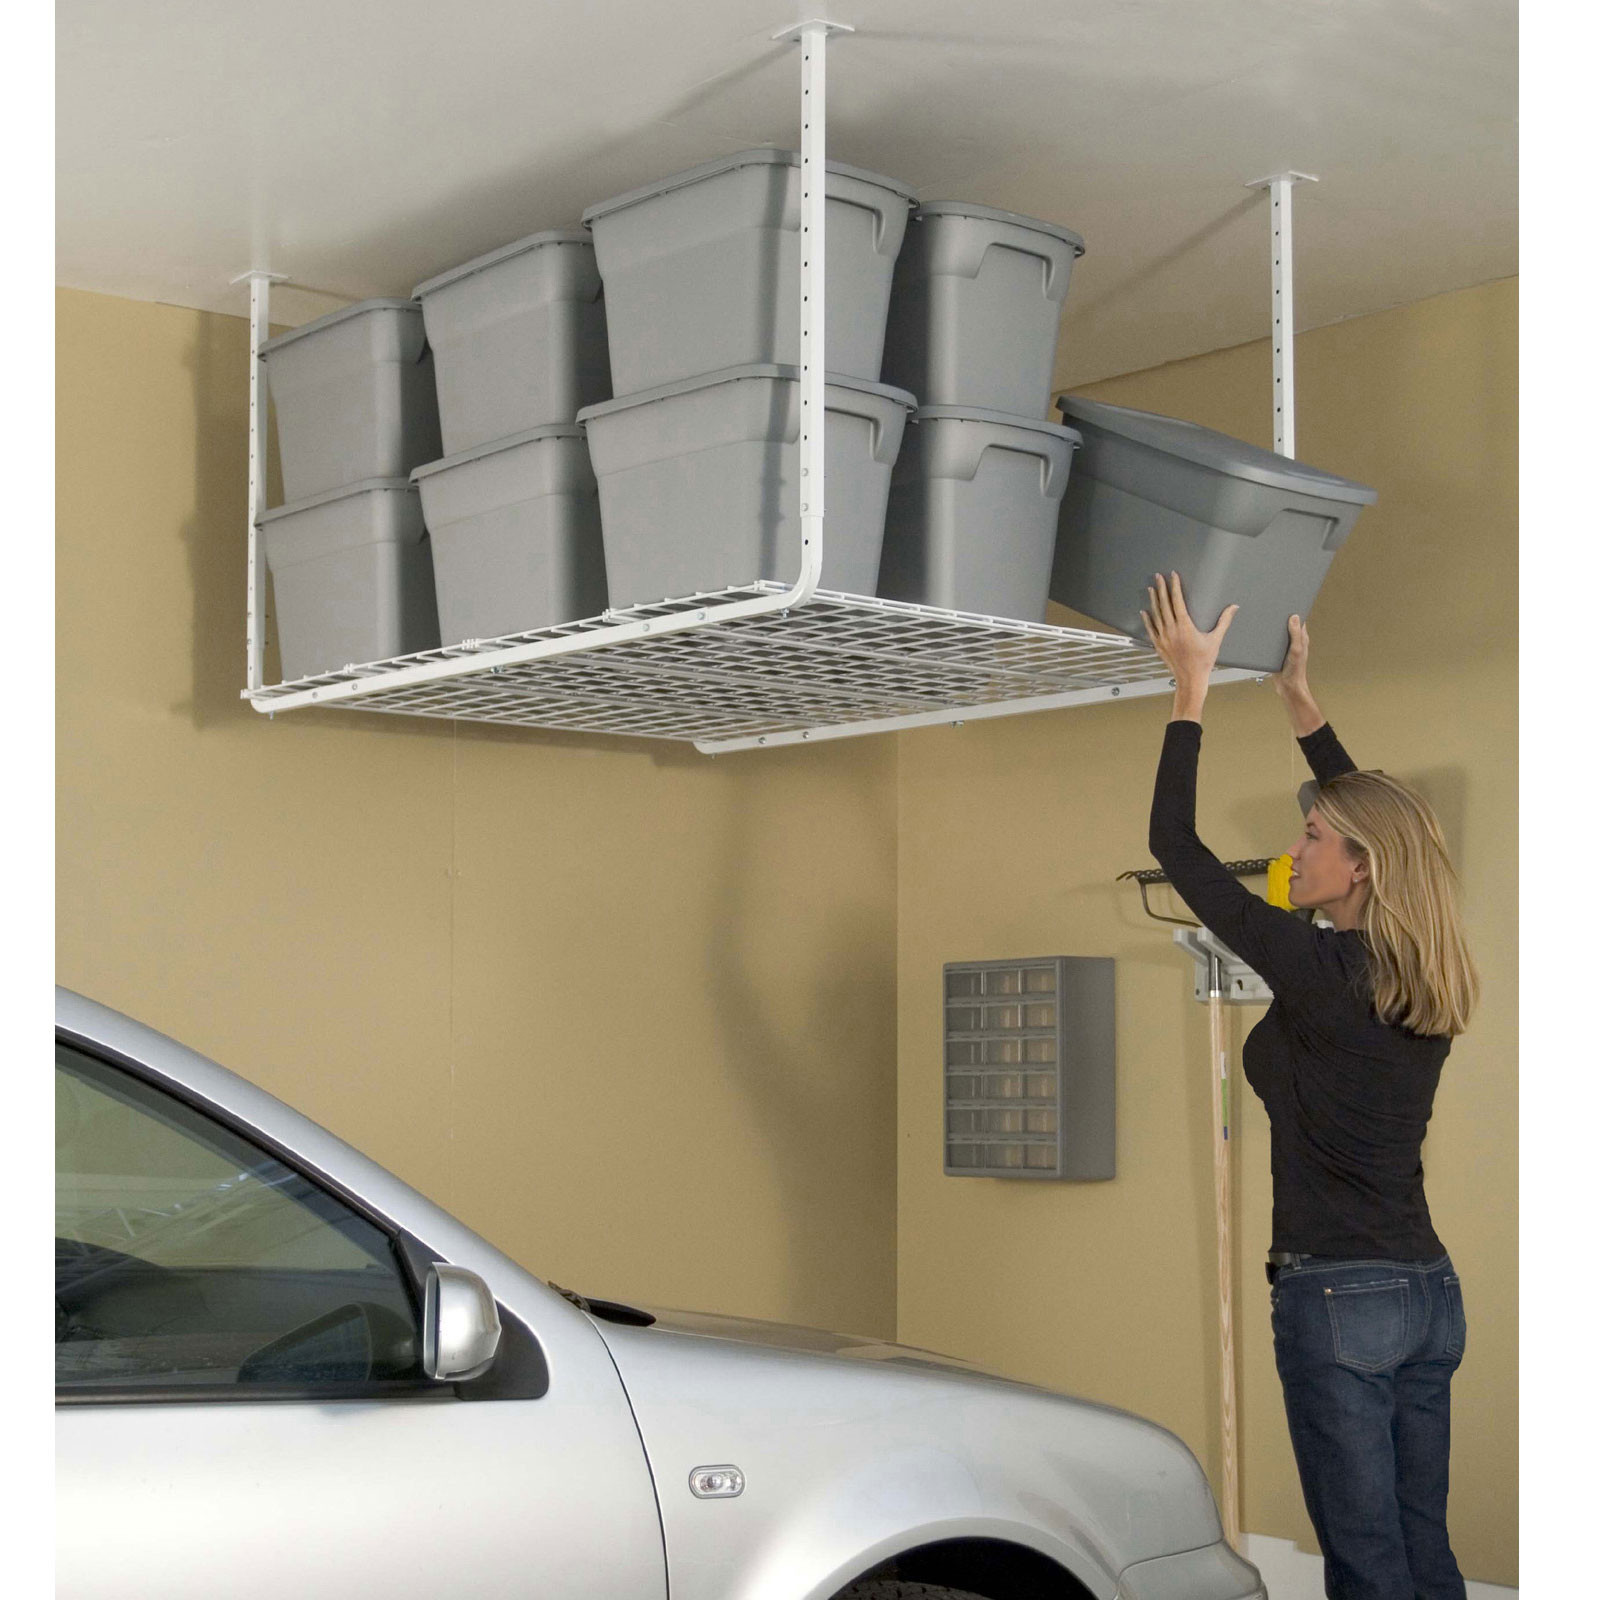 Best ideas about Overhead Storage Garage
. Save or Pin Hyloft 60" x 45" Ceiling Storage Unit 10 Now.